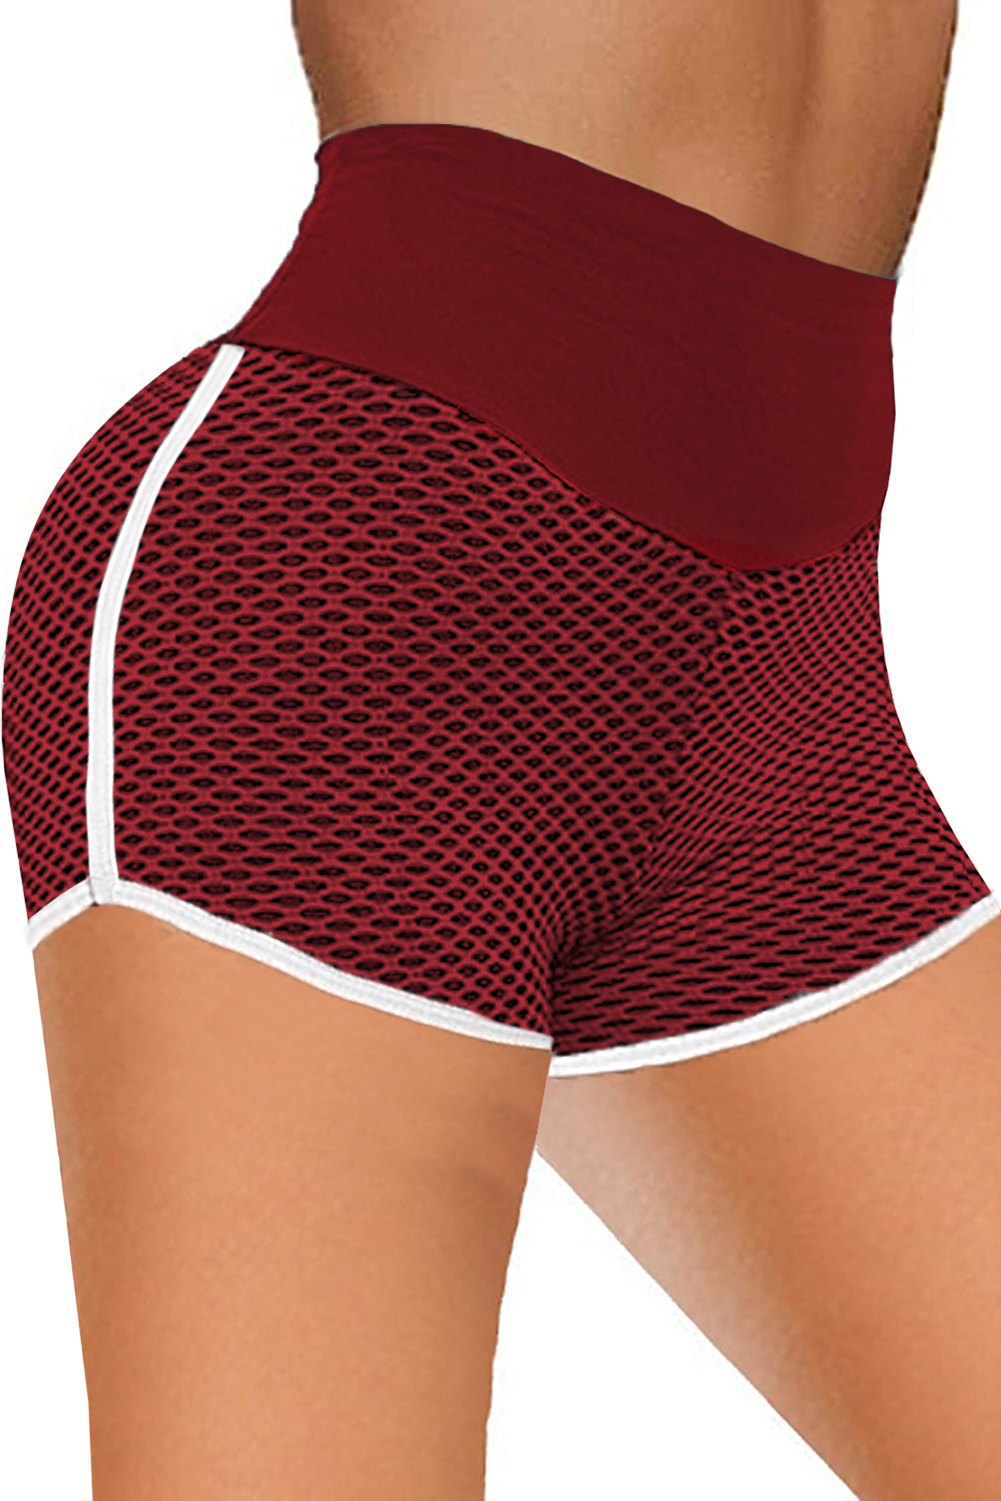 Ladies sports knit shorts (6)